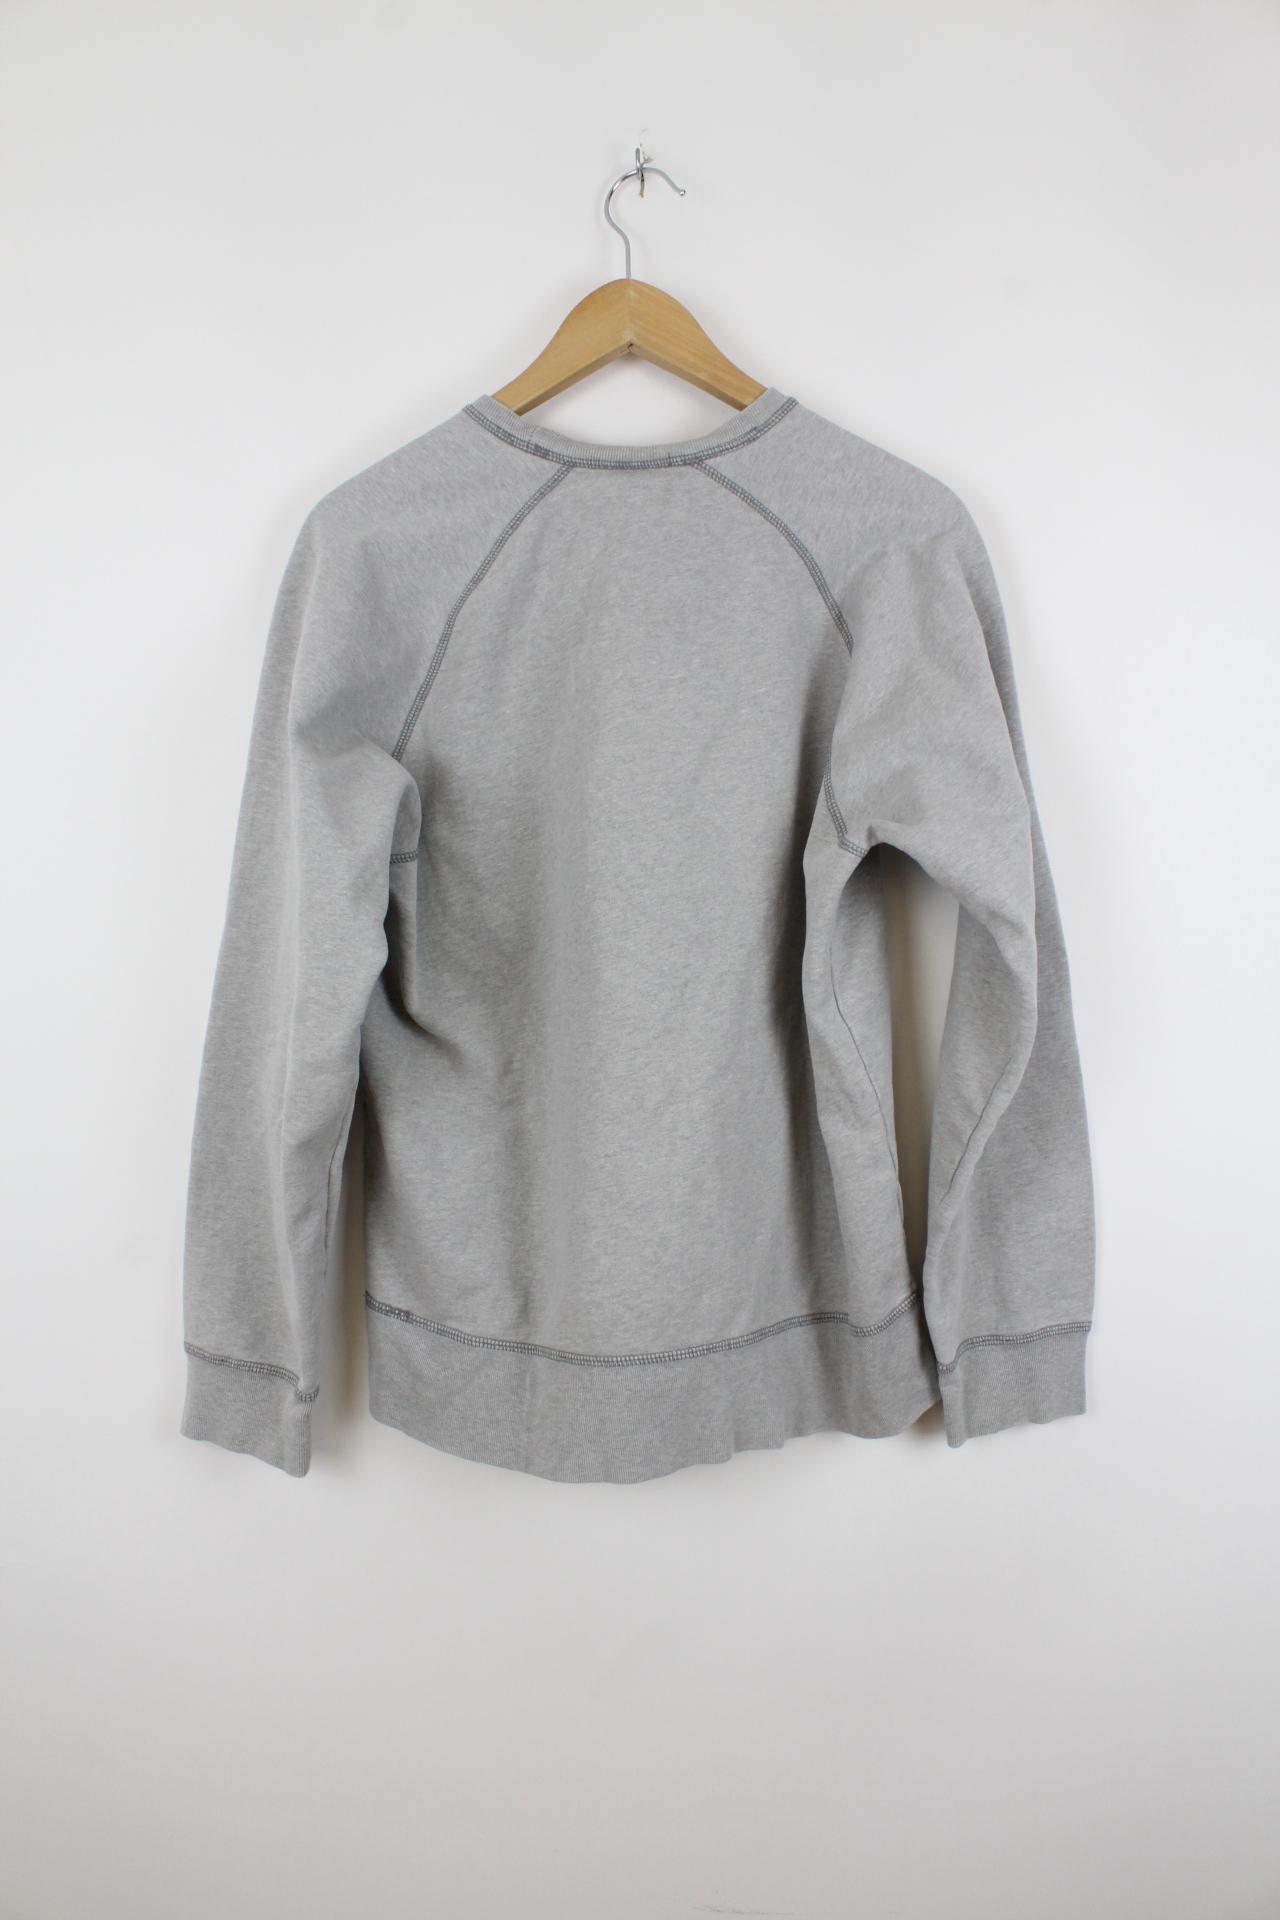 Tommy Hilfiger Sweater Grau - S